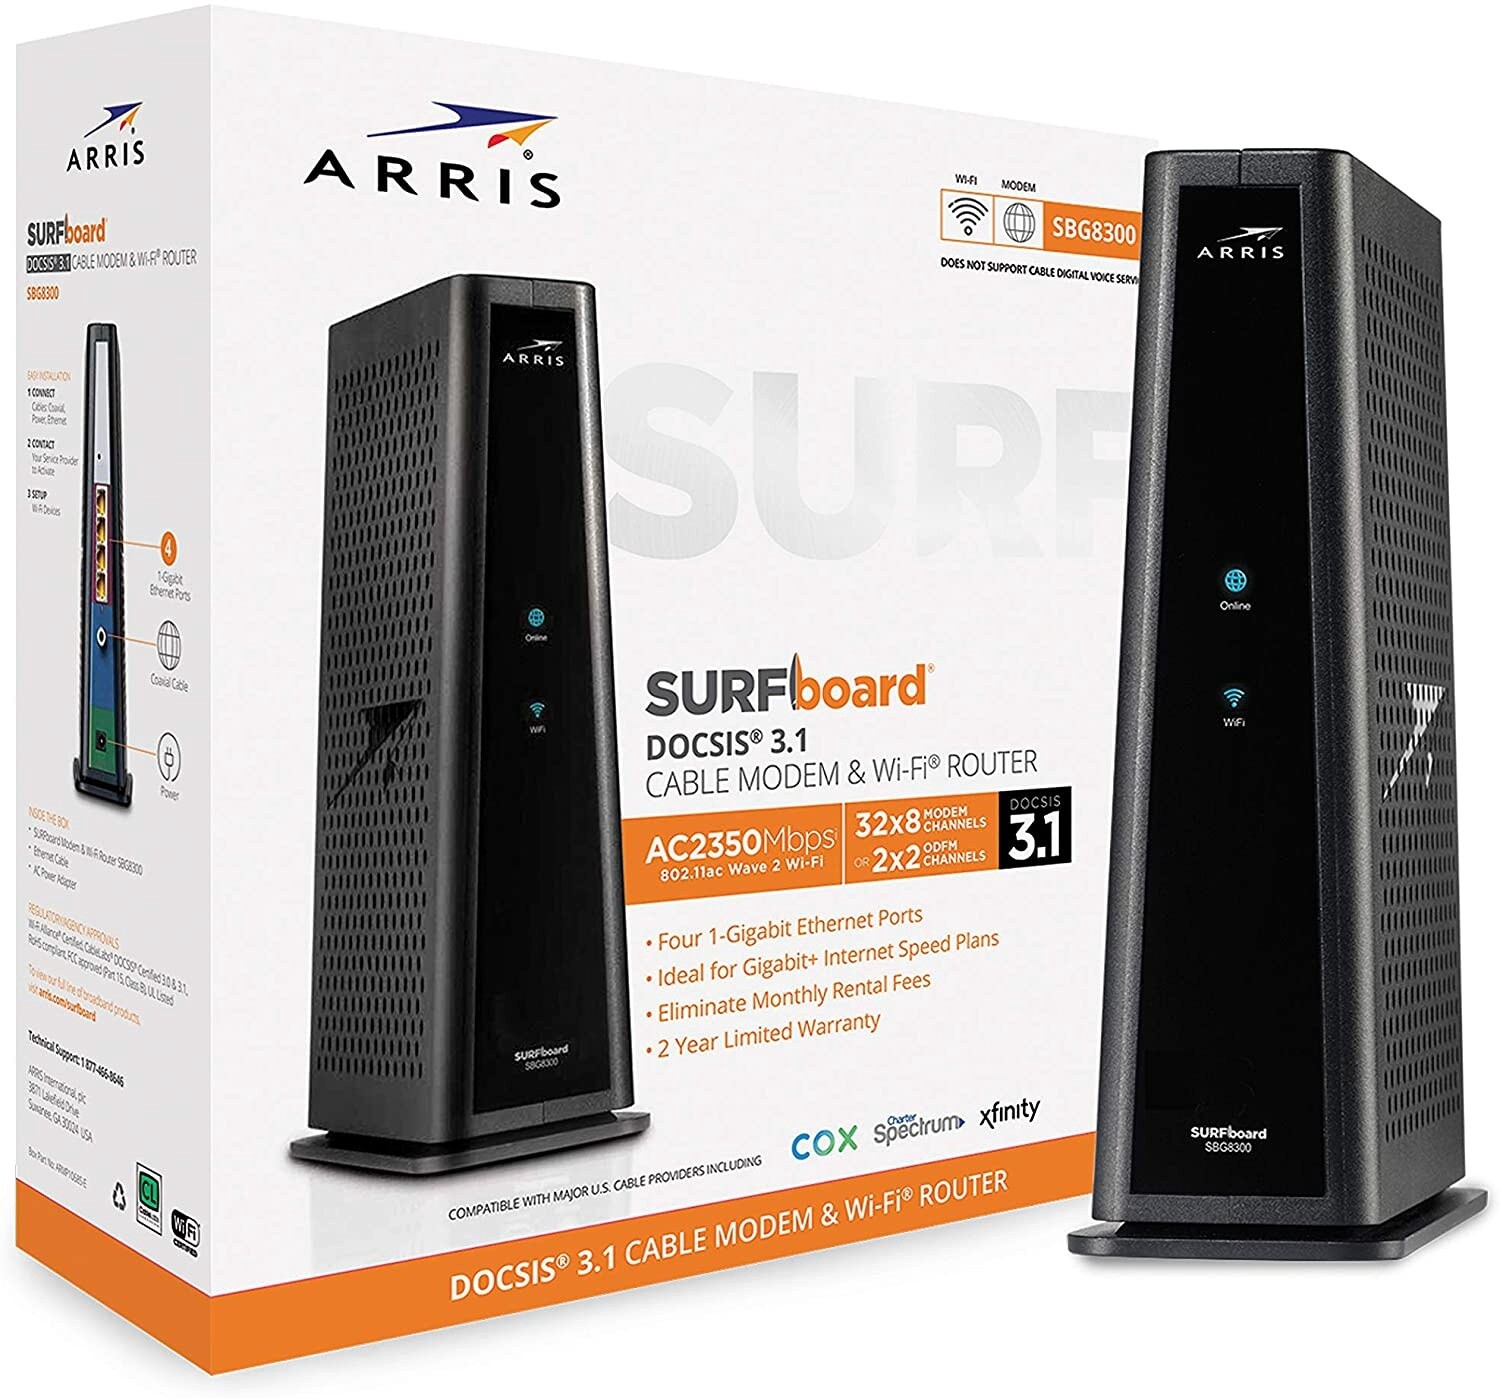 Network - Arris Surfboard SBG8300 Router/Modem